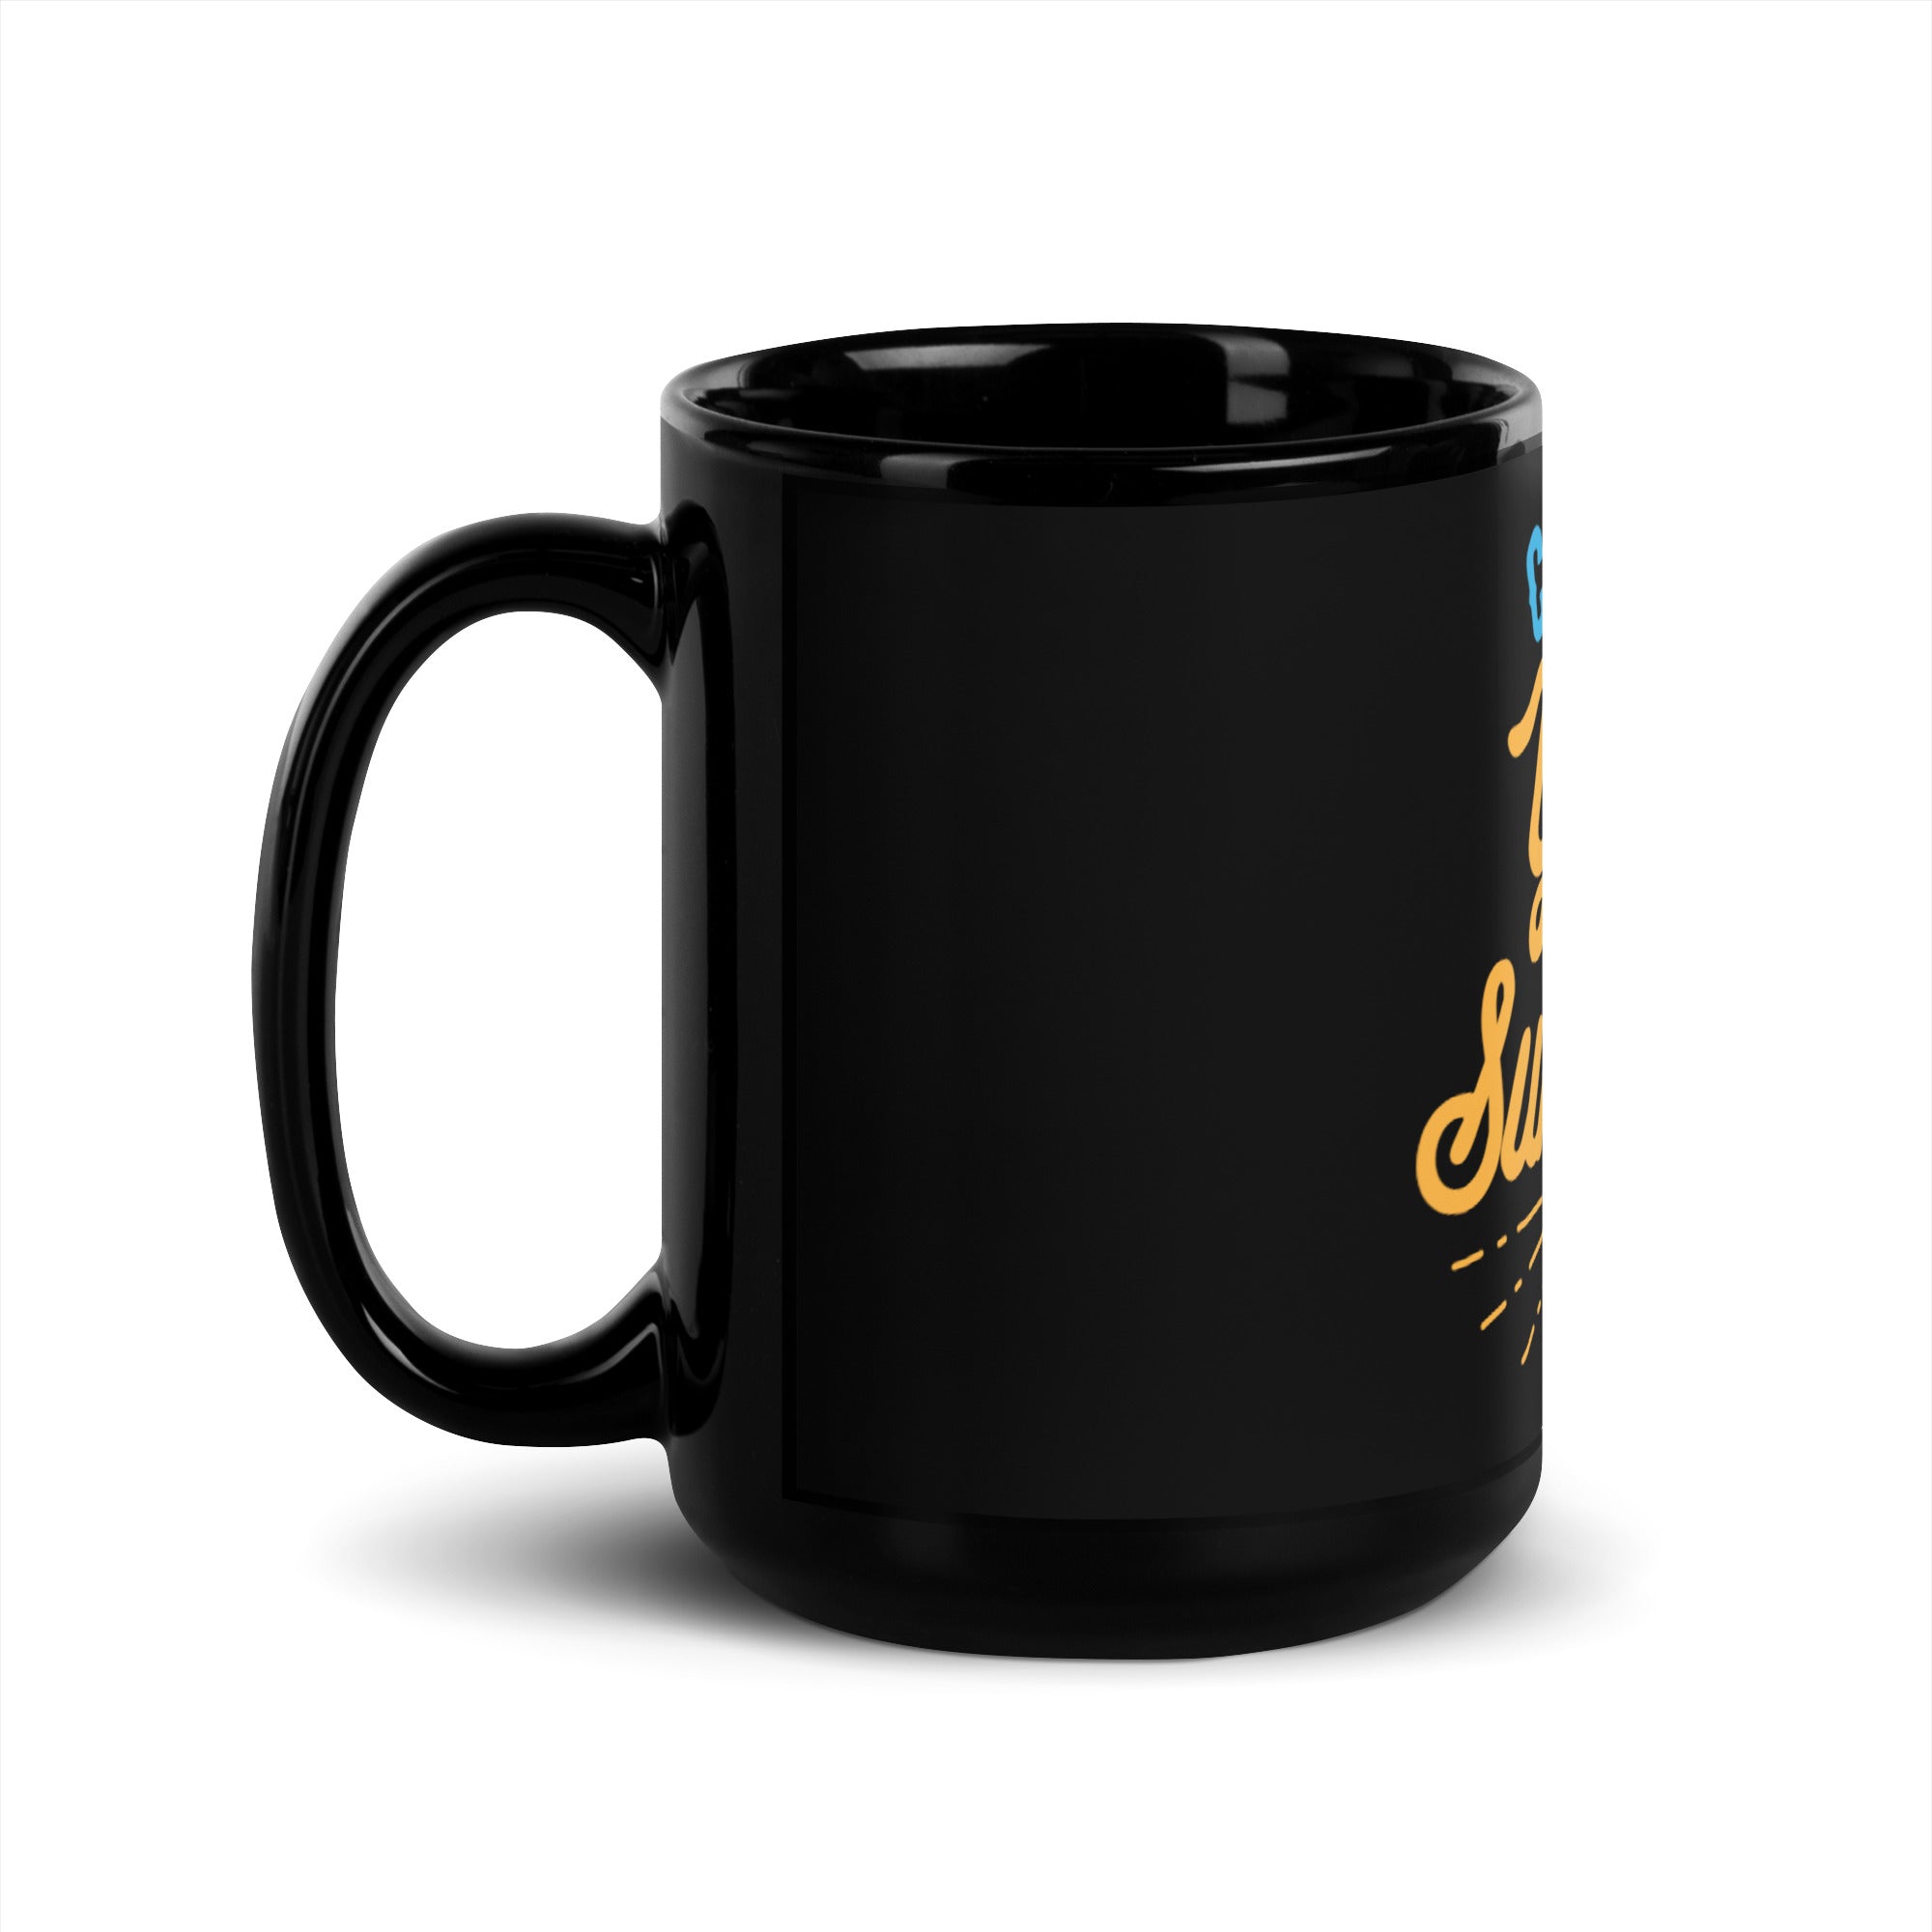 Create Your Own Sunshine - Black Glossy Mug